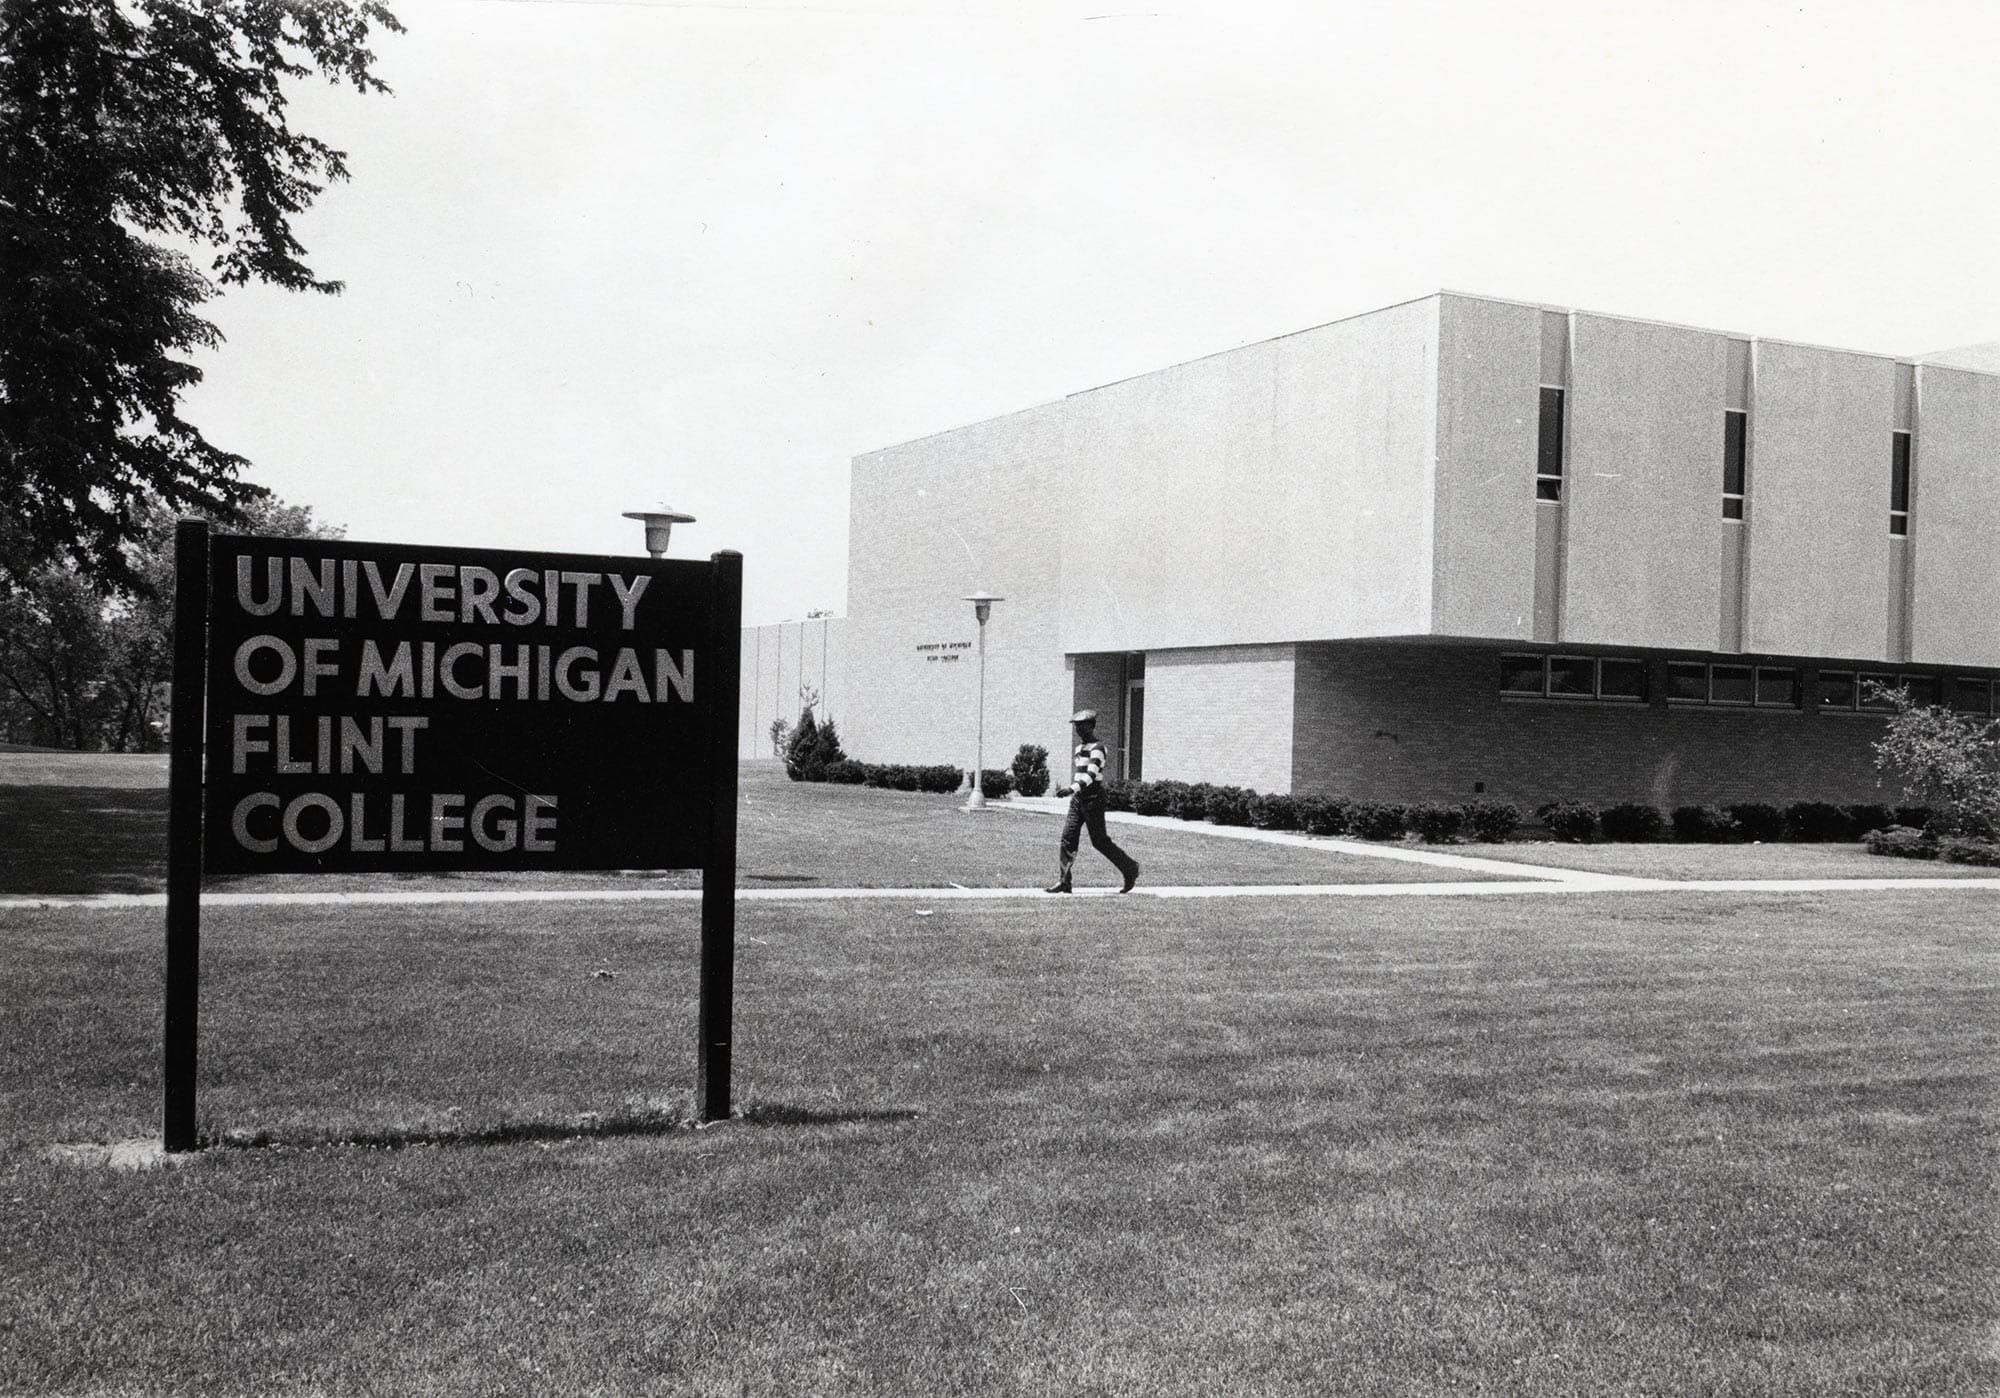 Young man walking outside U-M Flint College, 1970